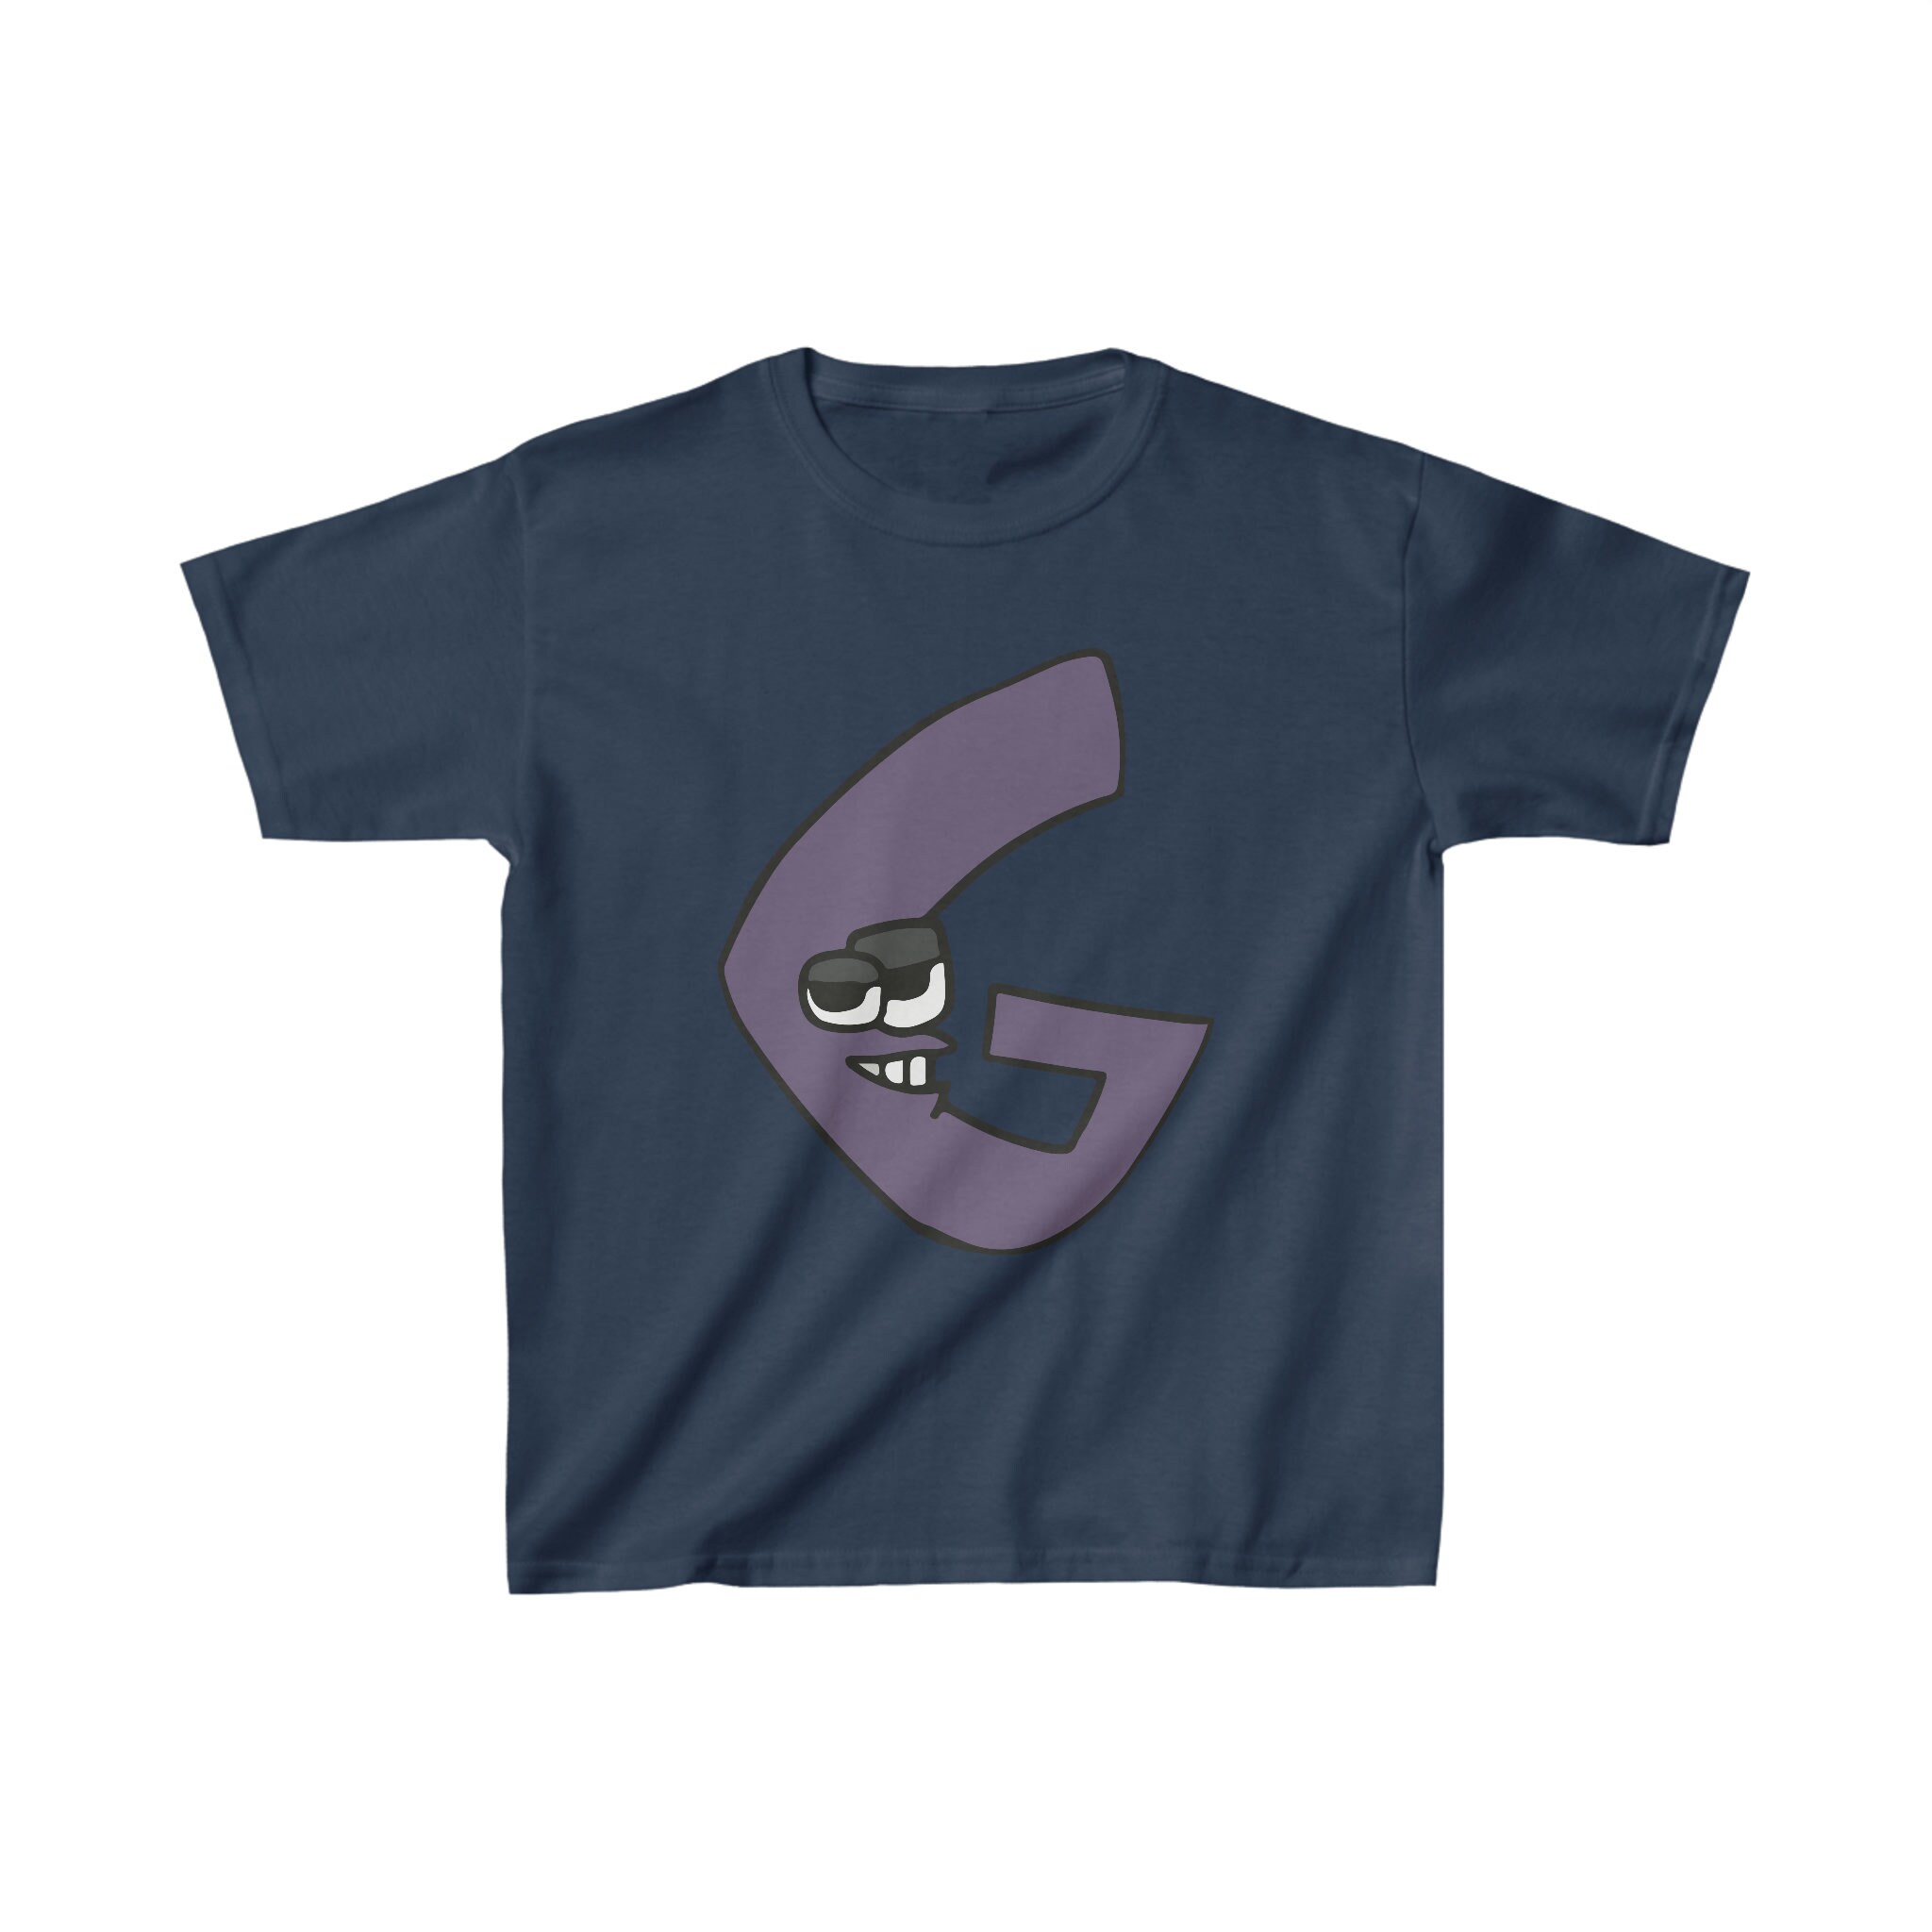 Snail Guy Latter Q Alphabet Lore shirt - Kingteeshop